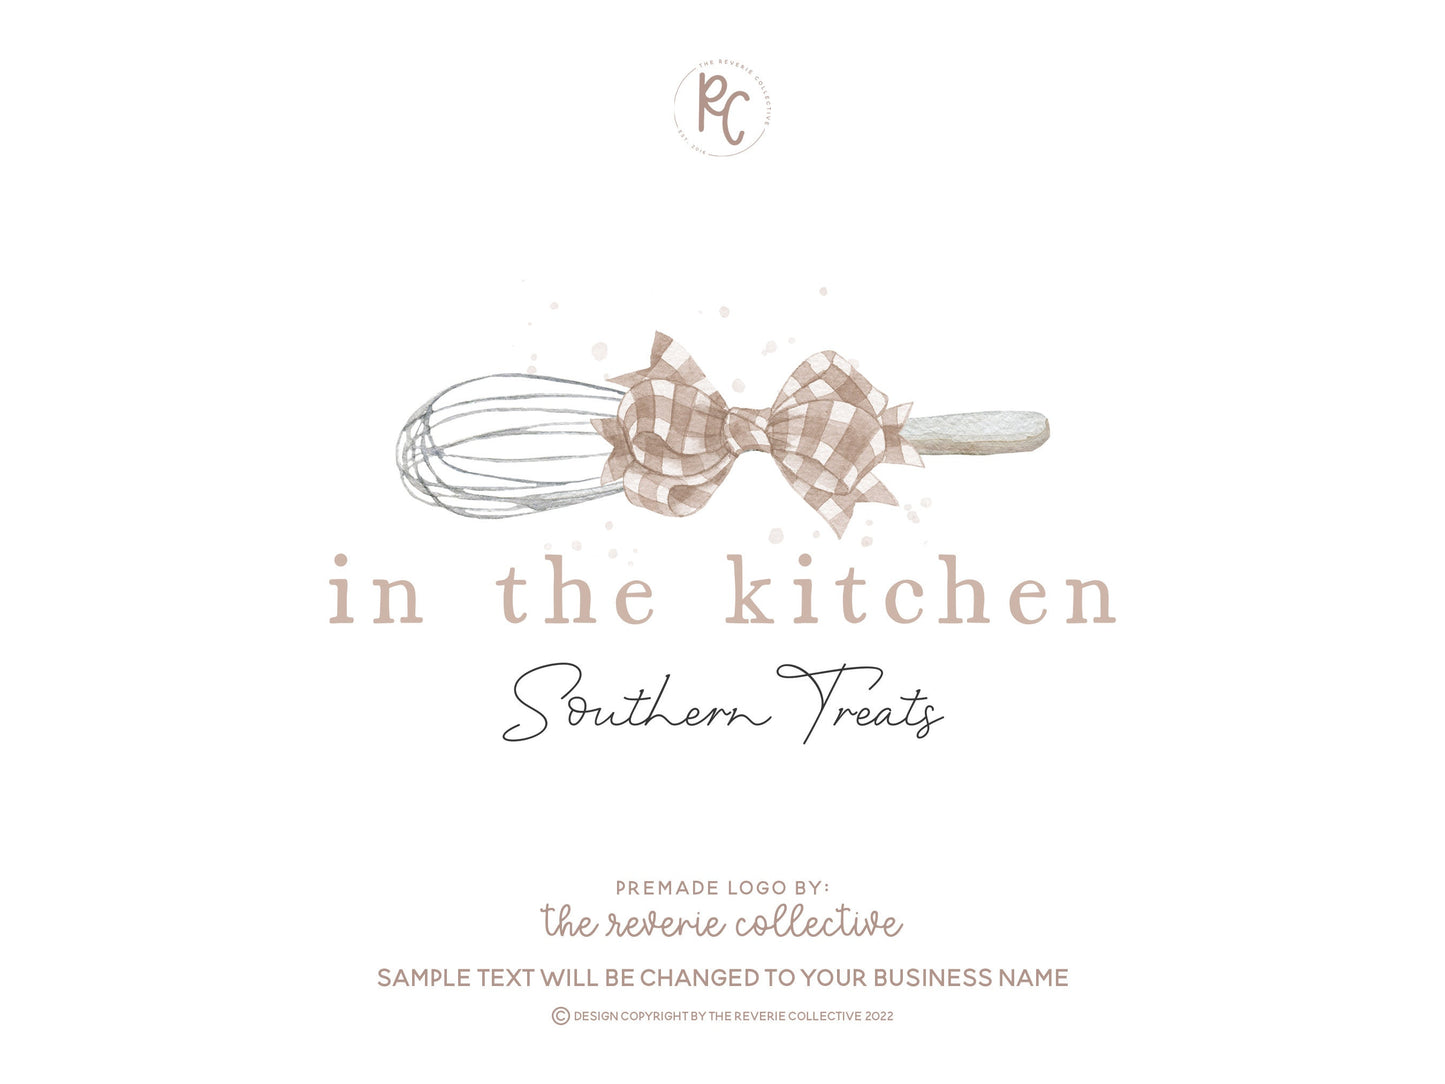 In The Kitchen | Premade Logo Design | Whisk, Plaid Bow, Kitchen, Southern, Farmhouse